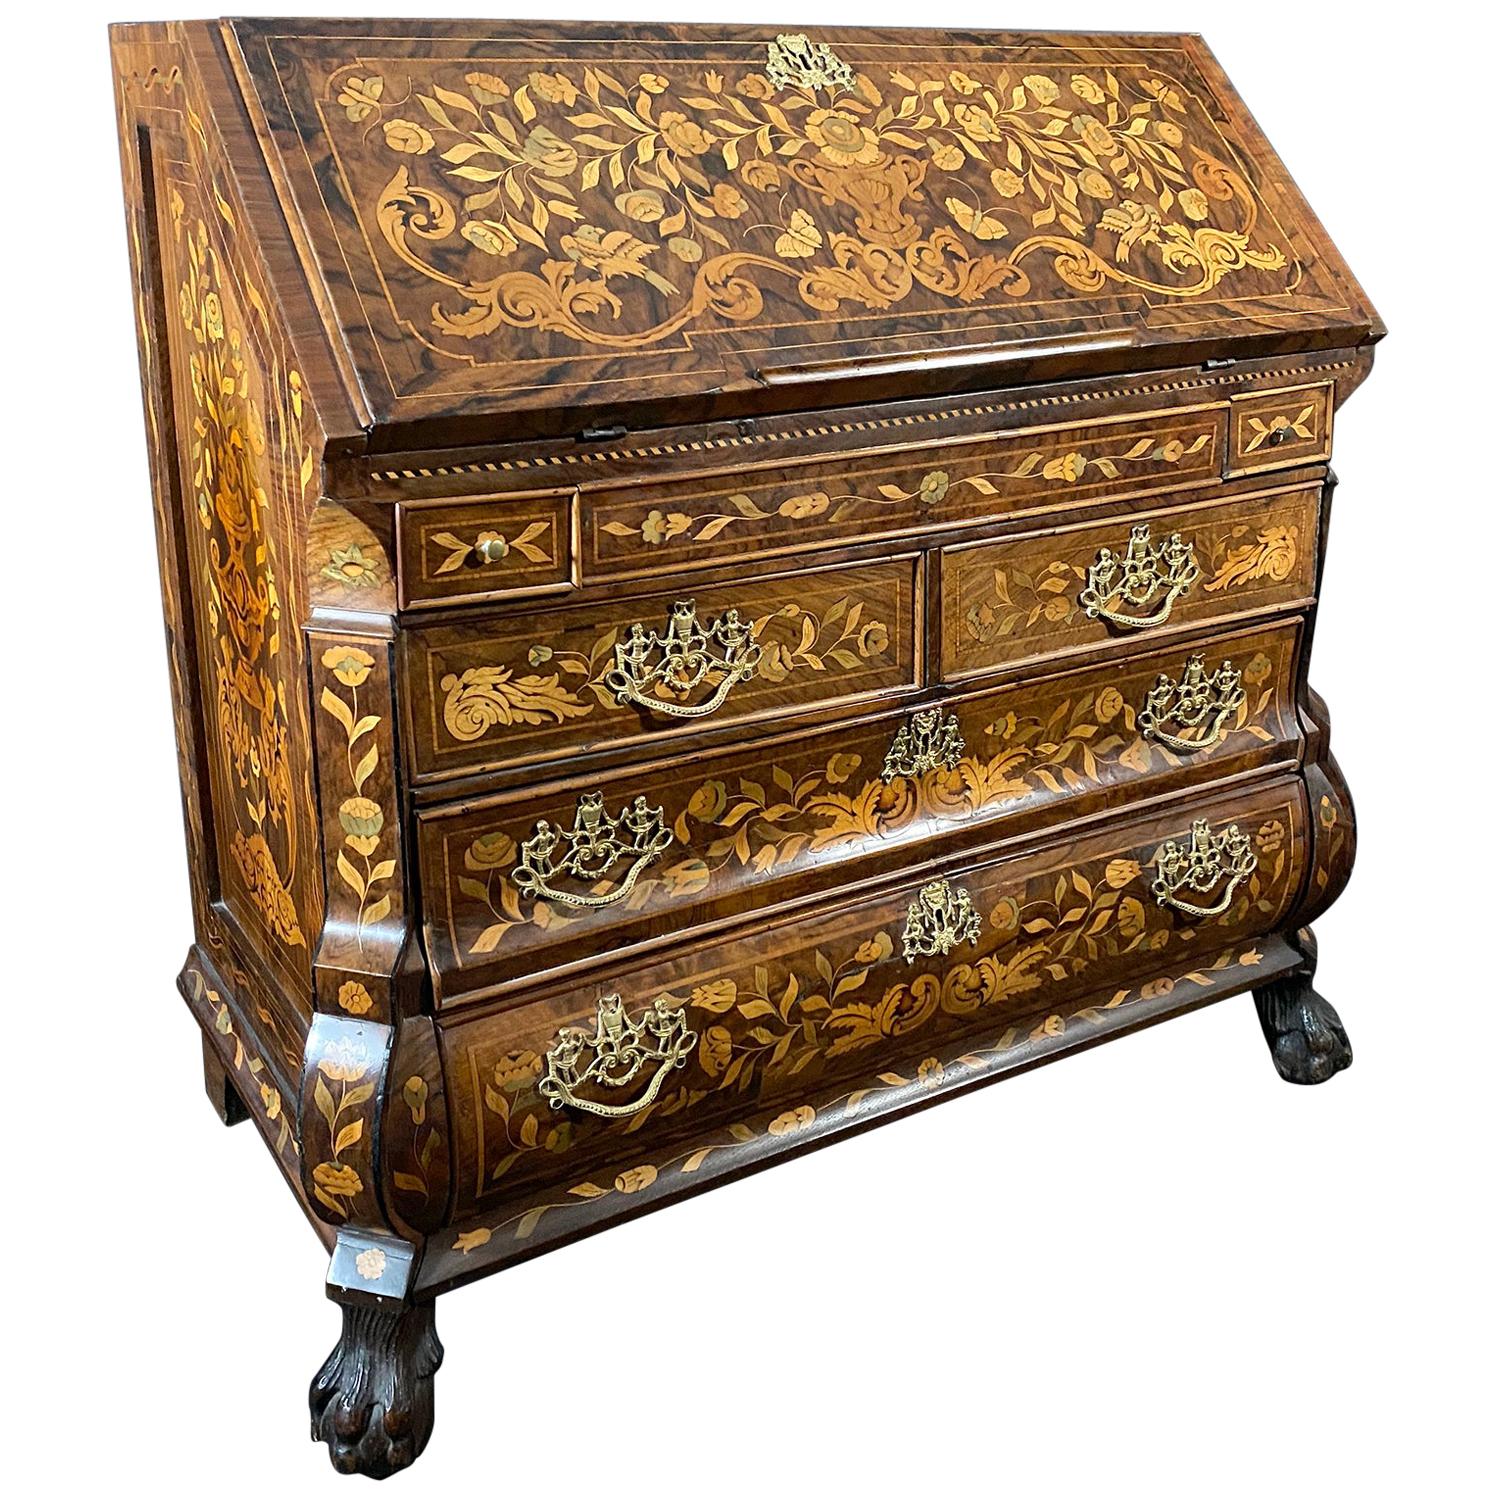 Dutch Rococo Bombe Marquetry Inlaid Dropfront Desk, Late 18th Century For Sale